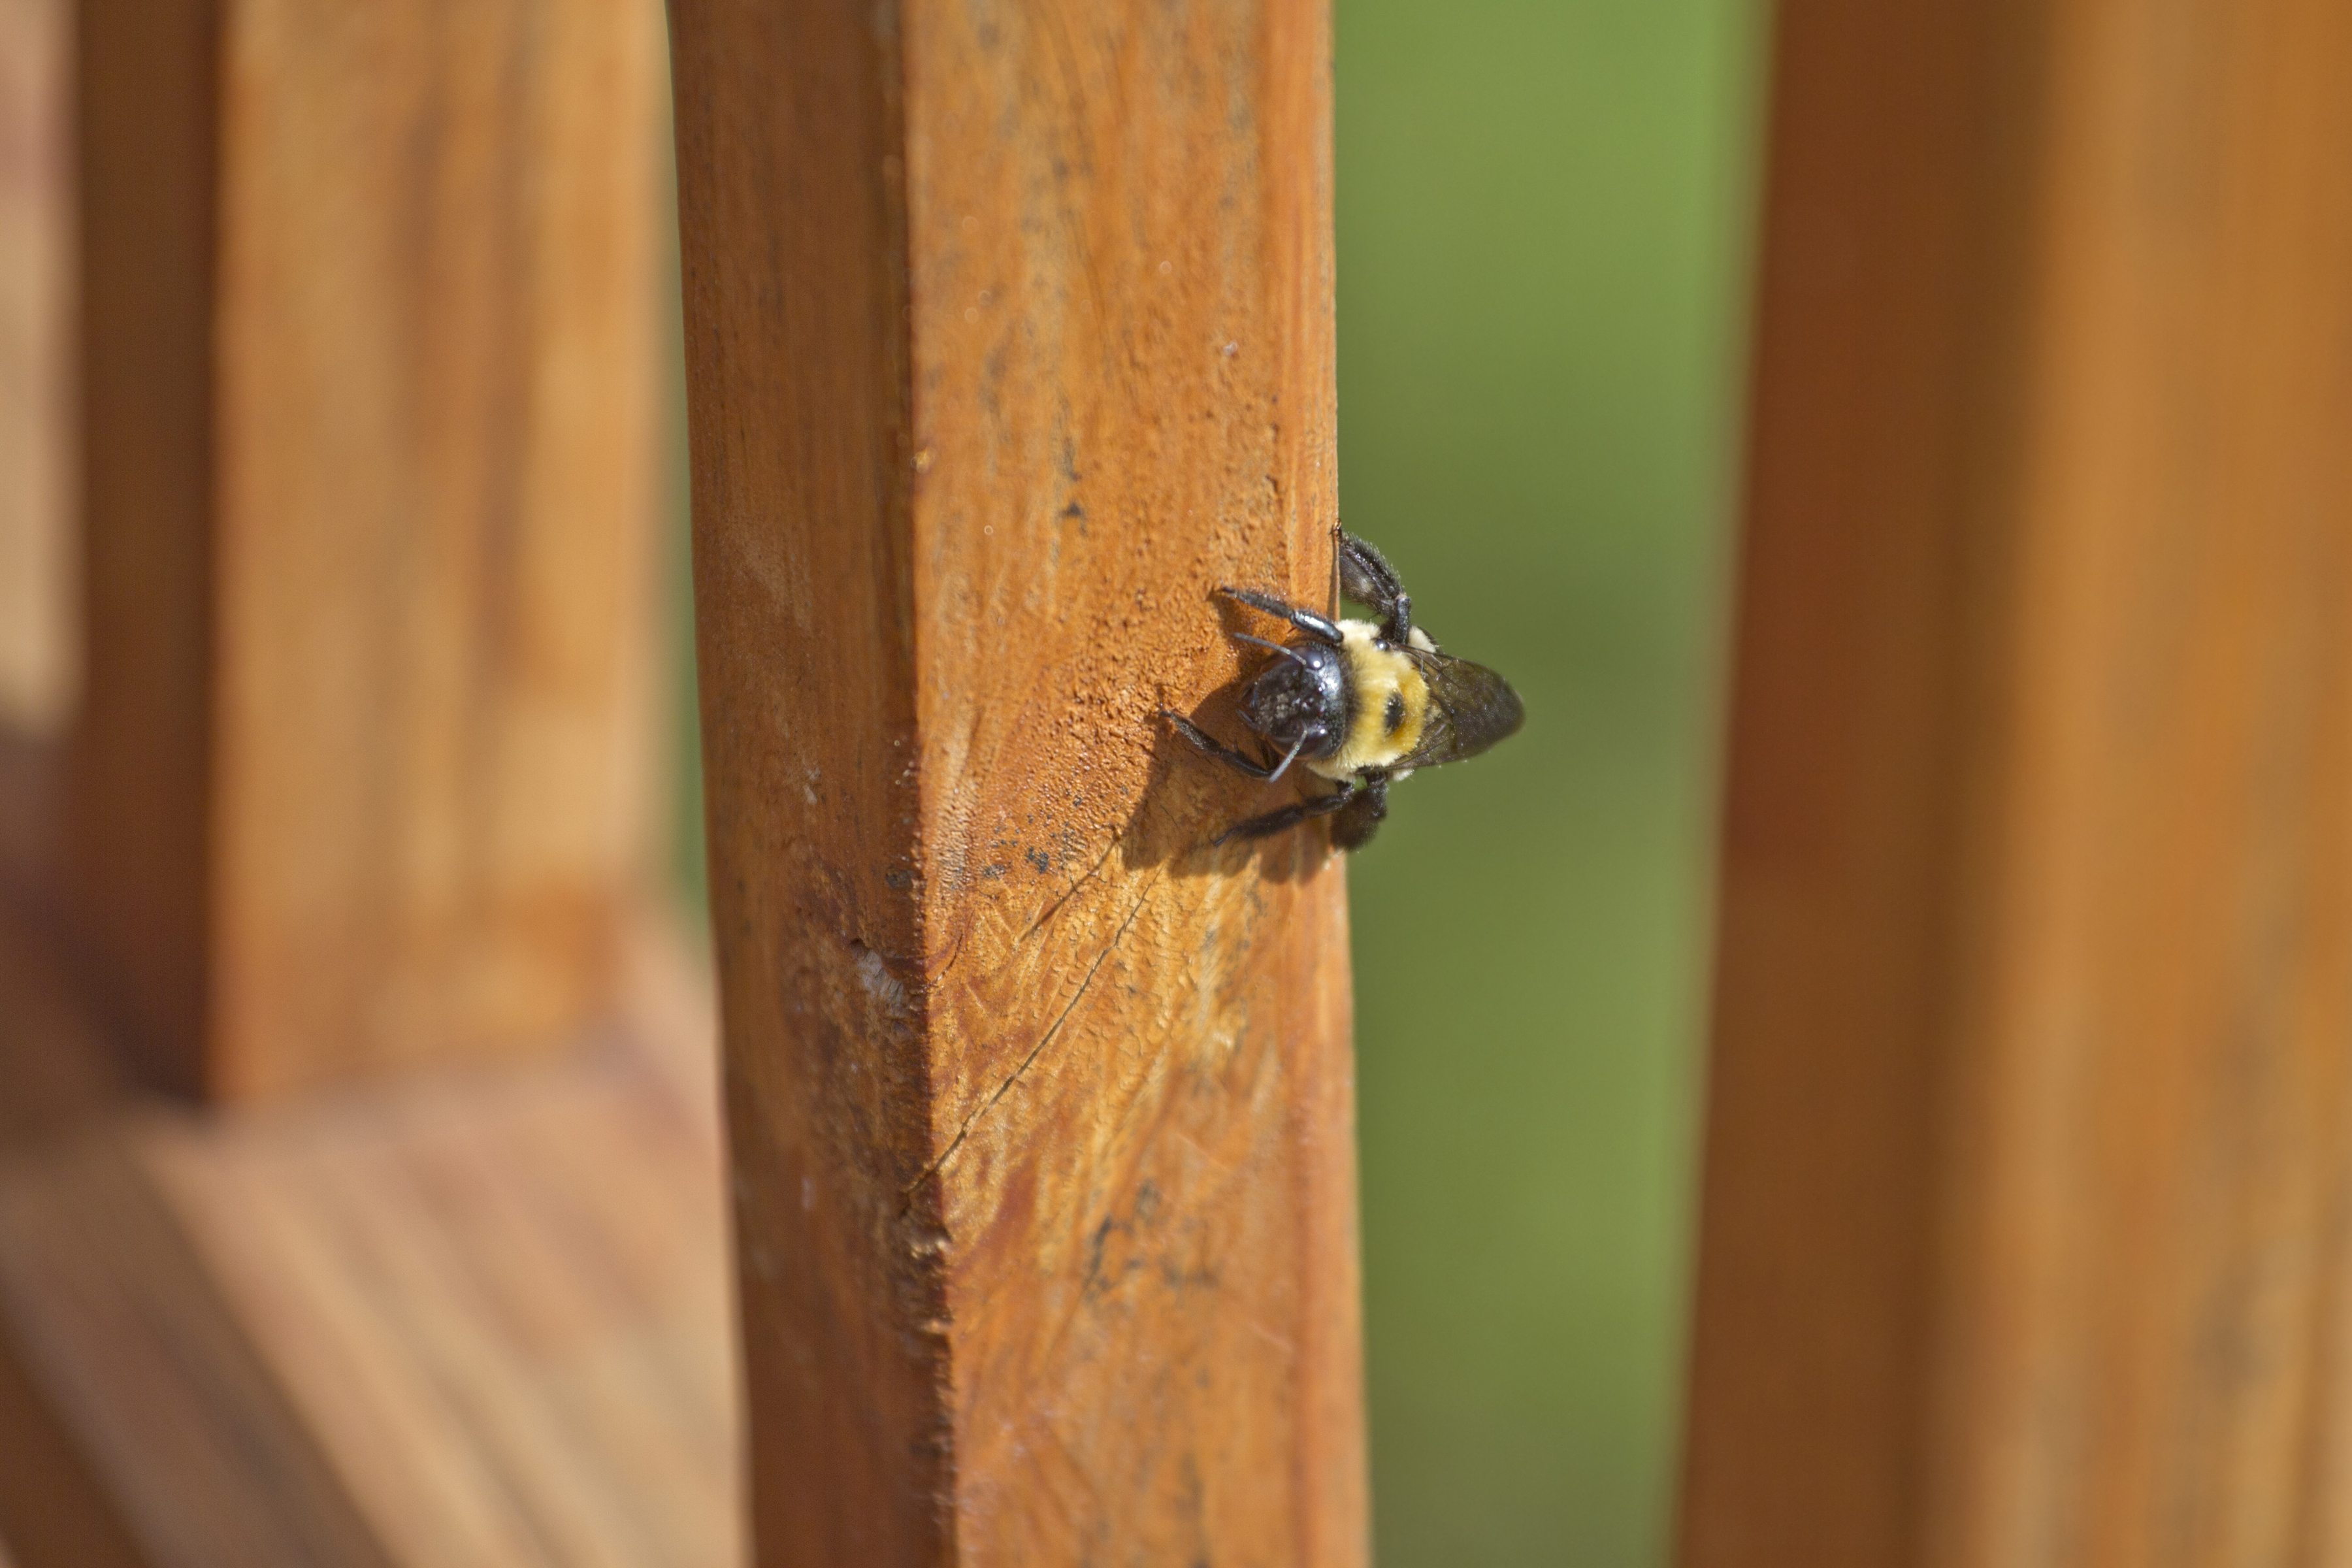 A carpenter bee burrowing into a wooden deck